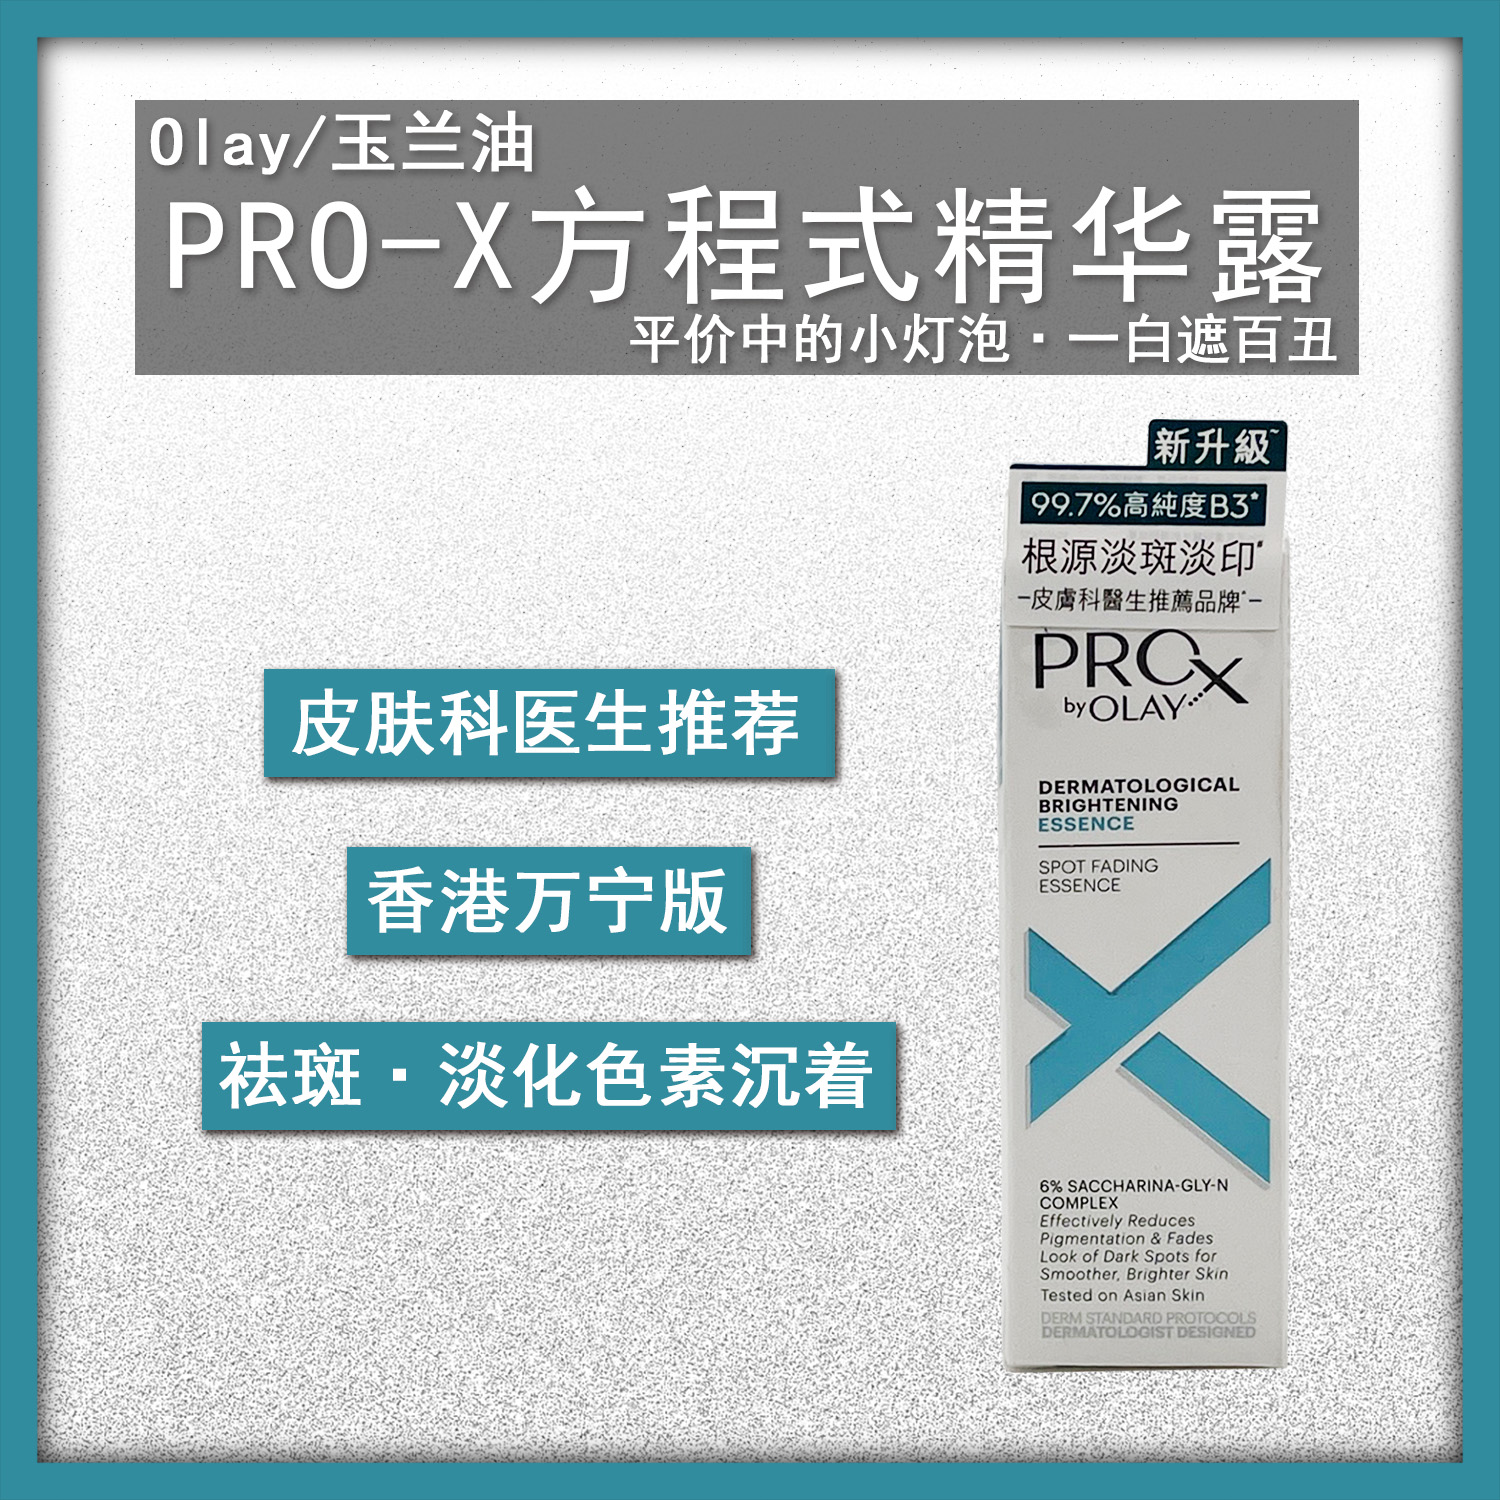 Olay/玉兰油PRO-X专业方程式淡斑亮肤精华露提亮肤色淡斑去角质